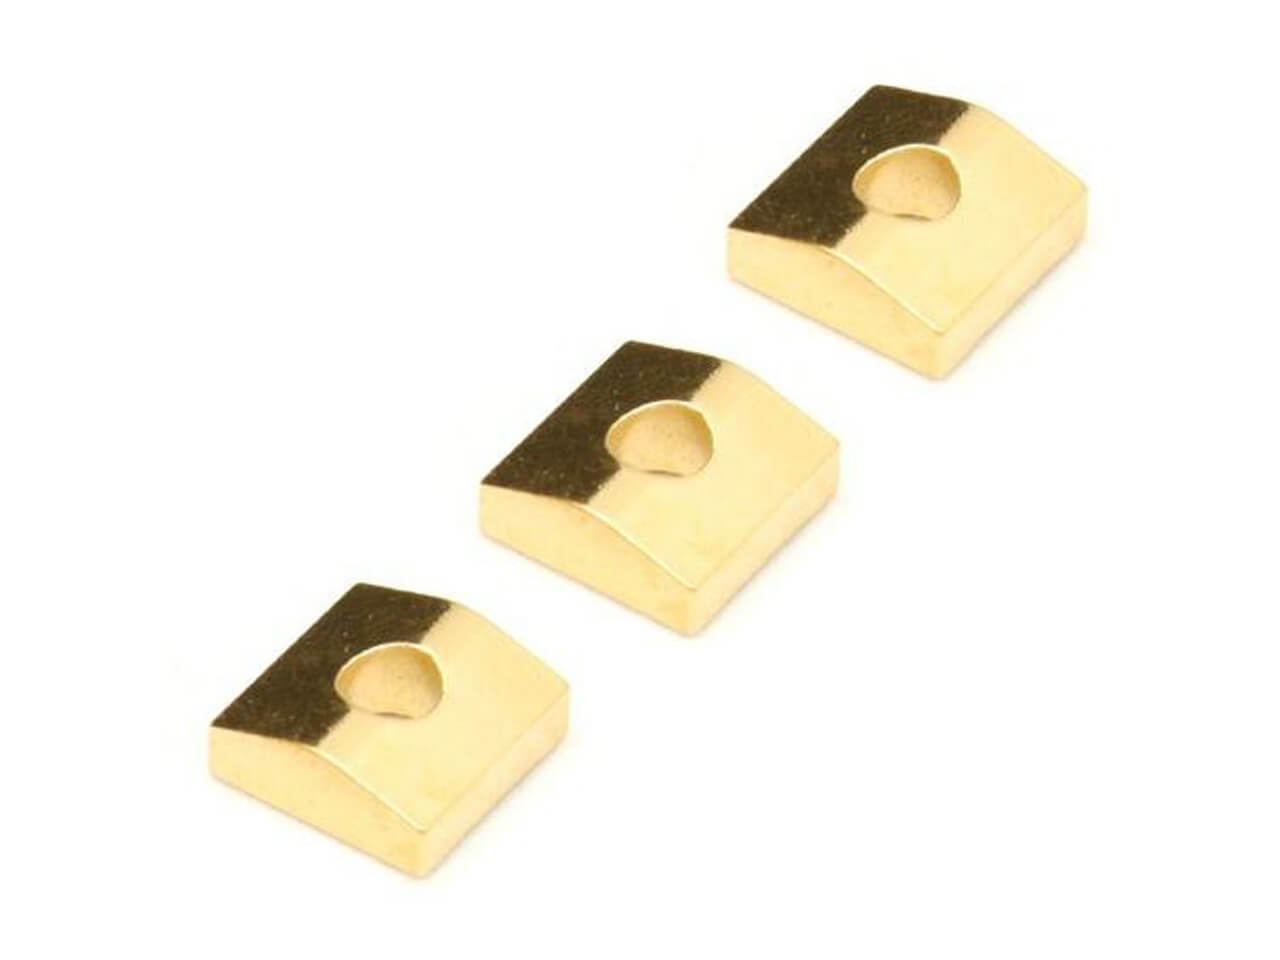 Floyd Rose Original Nut Clamping Blocks【Set of 3】-Gold-<br>(ナットキャップ)(フロイドローズ)